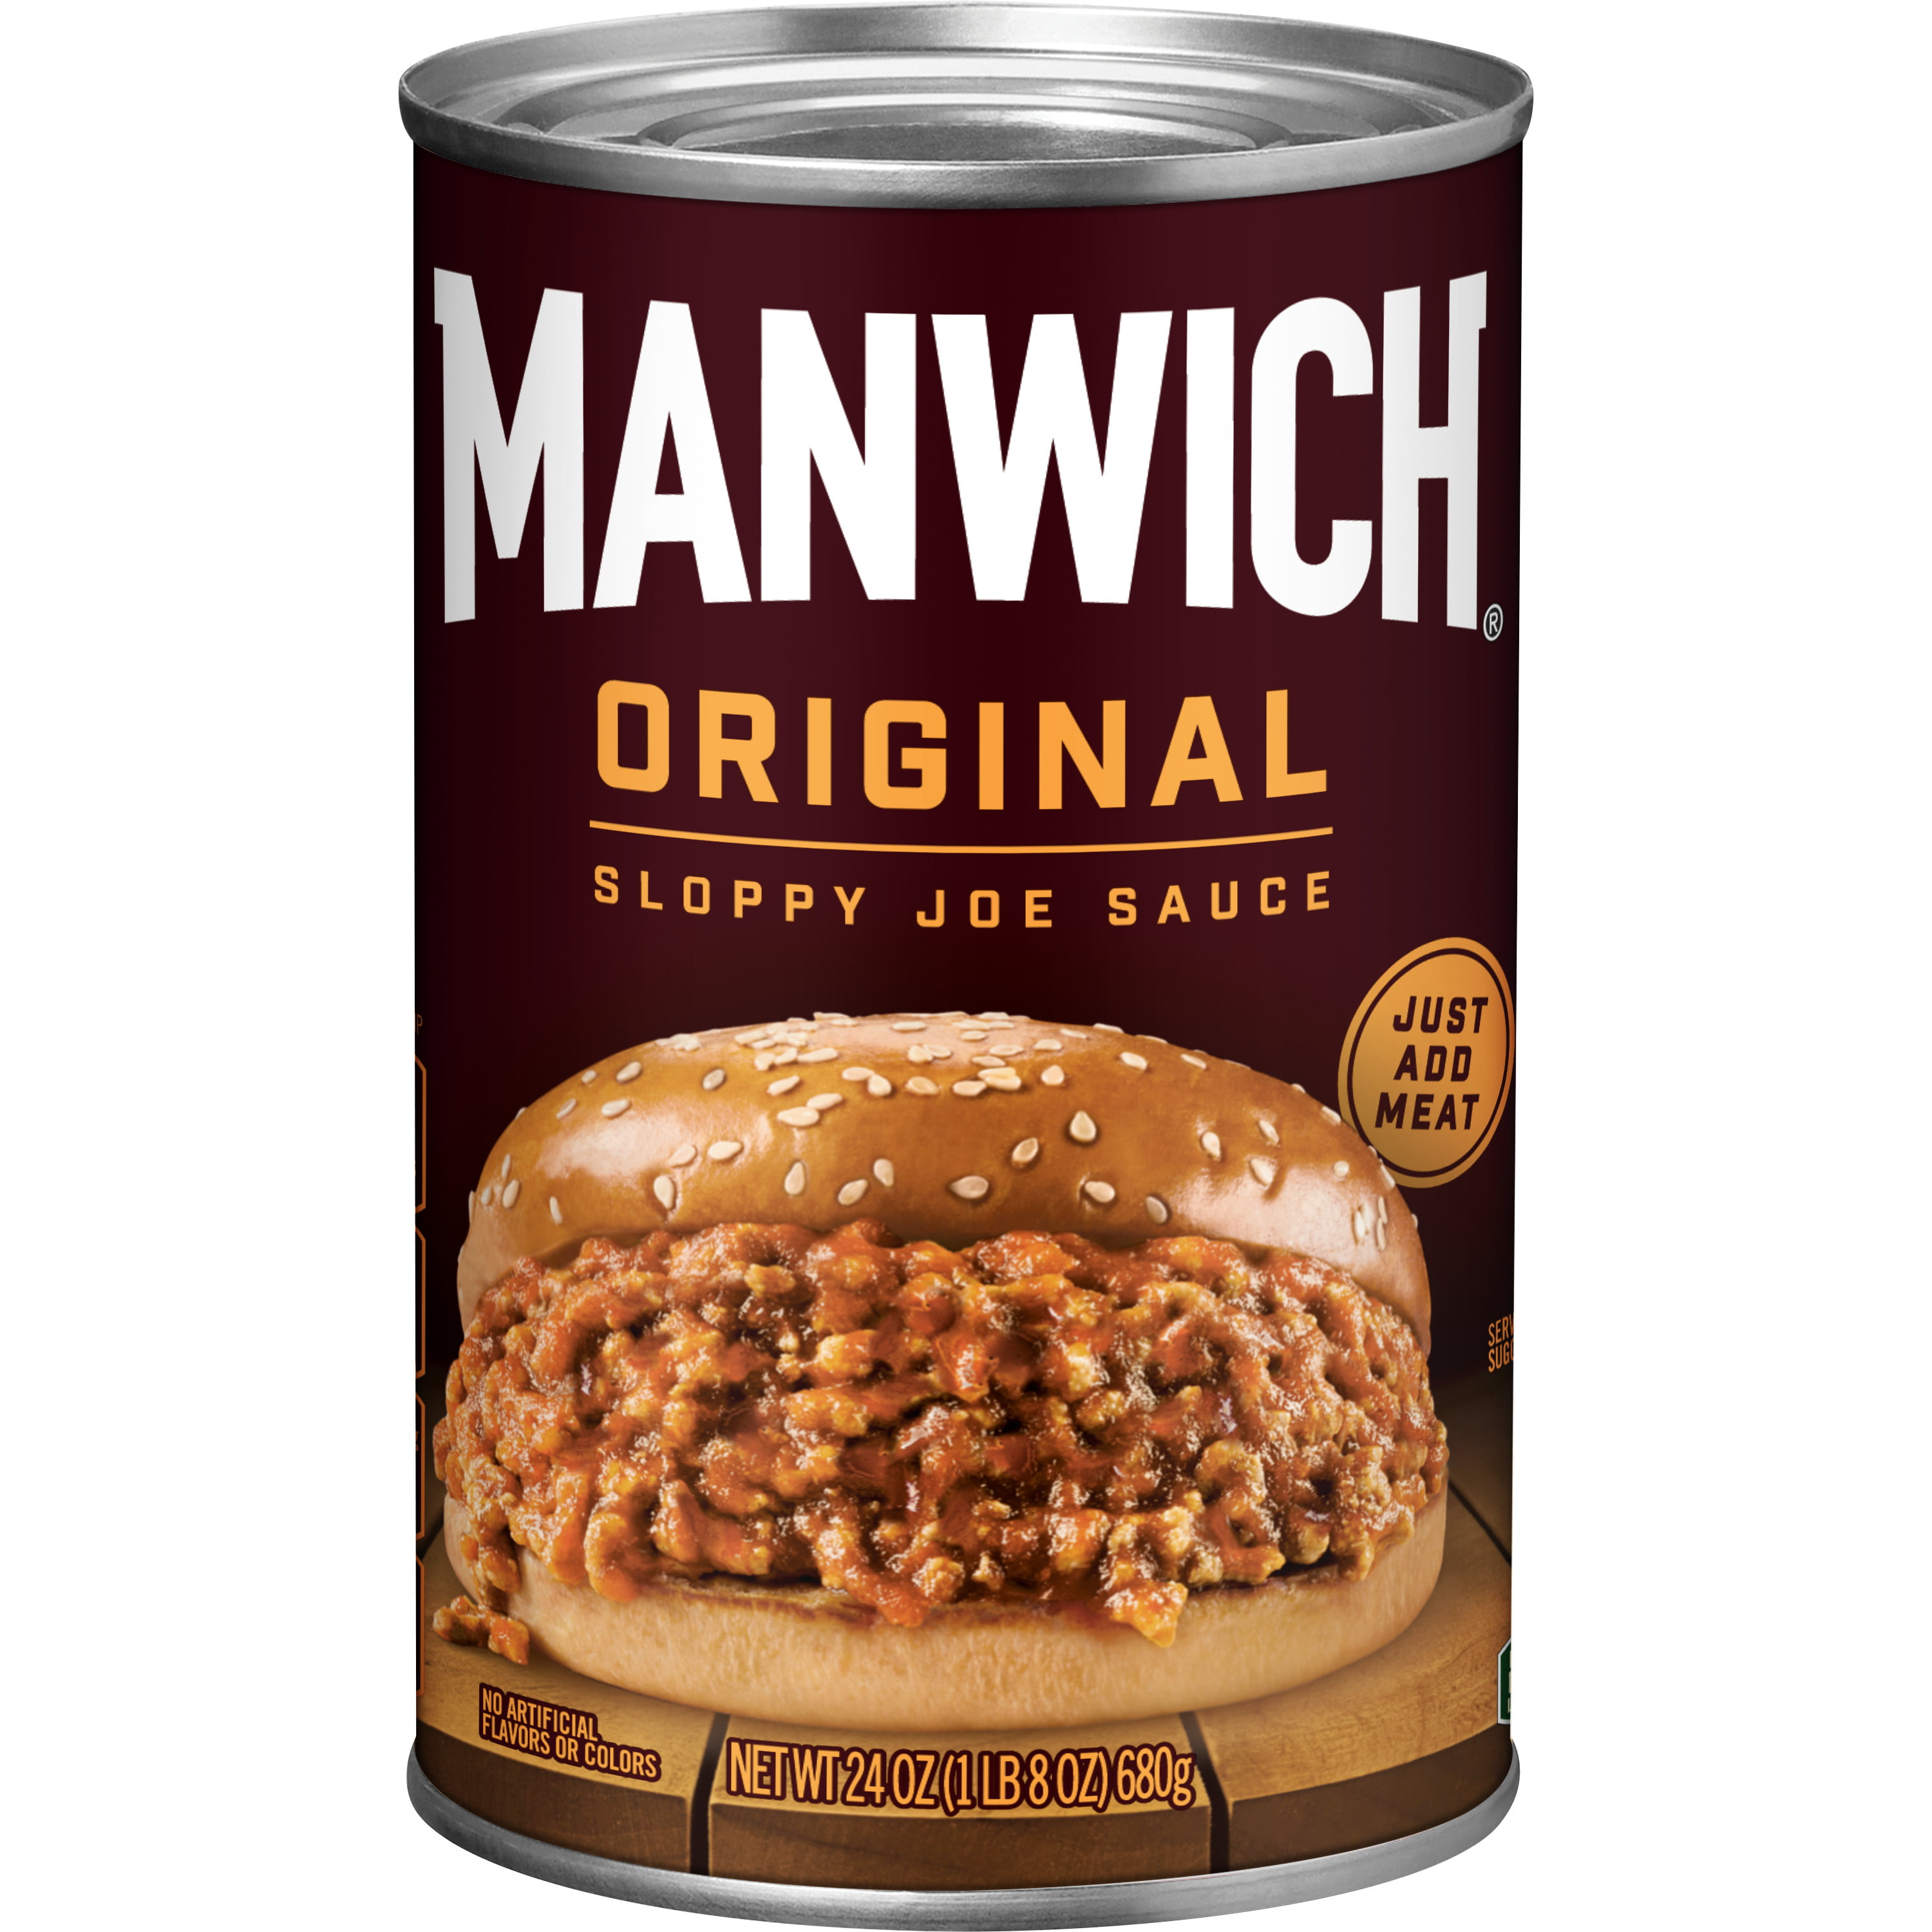 Manwich Original Sloppy Joe Sauce, Canned Sauce, 24 OZ - Walmart.com ...